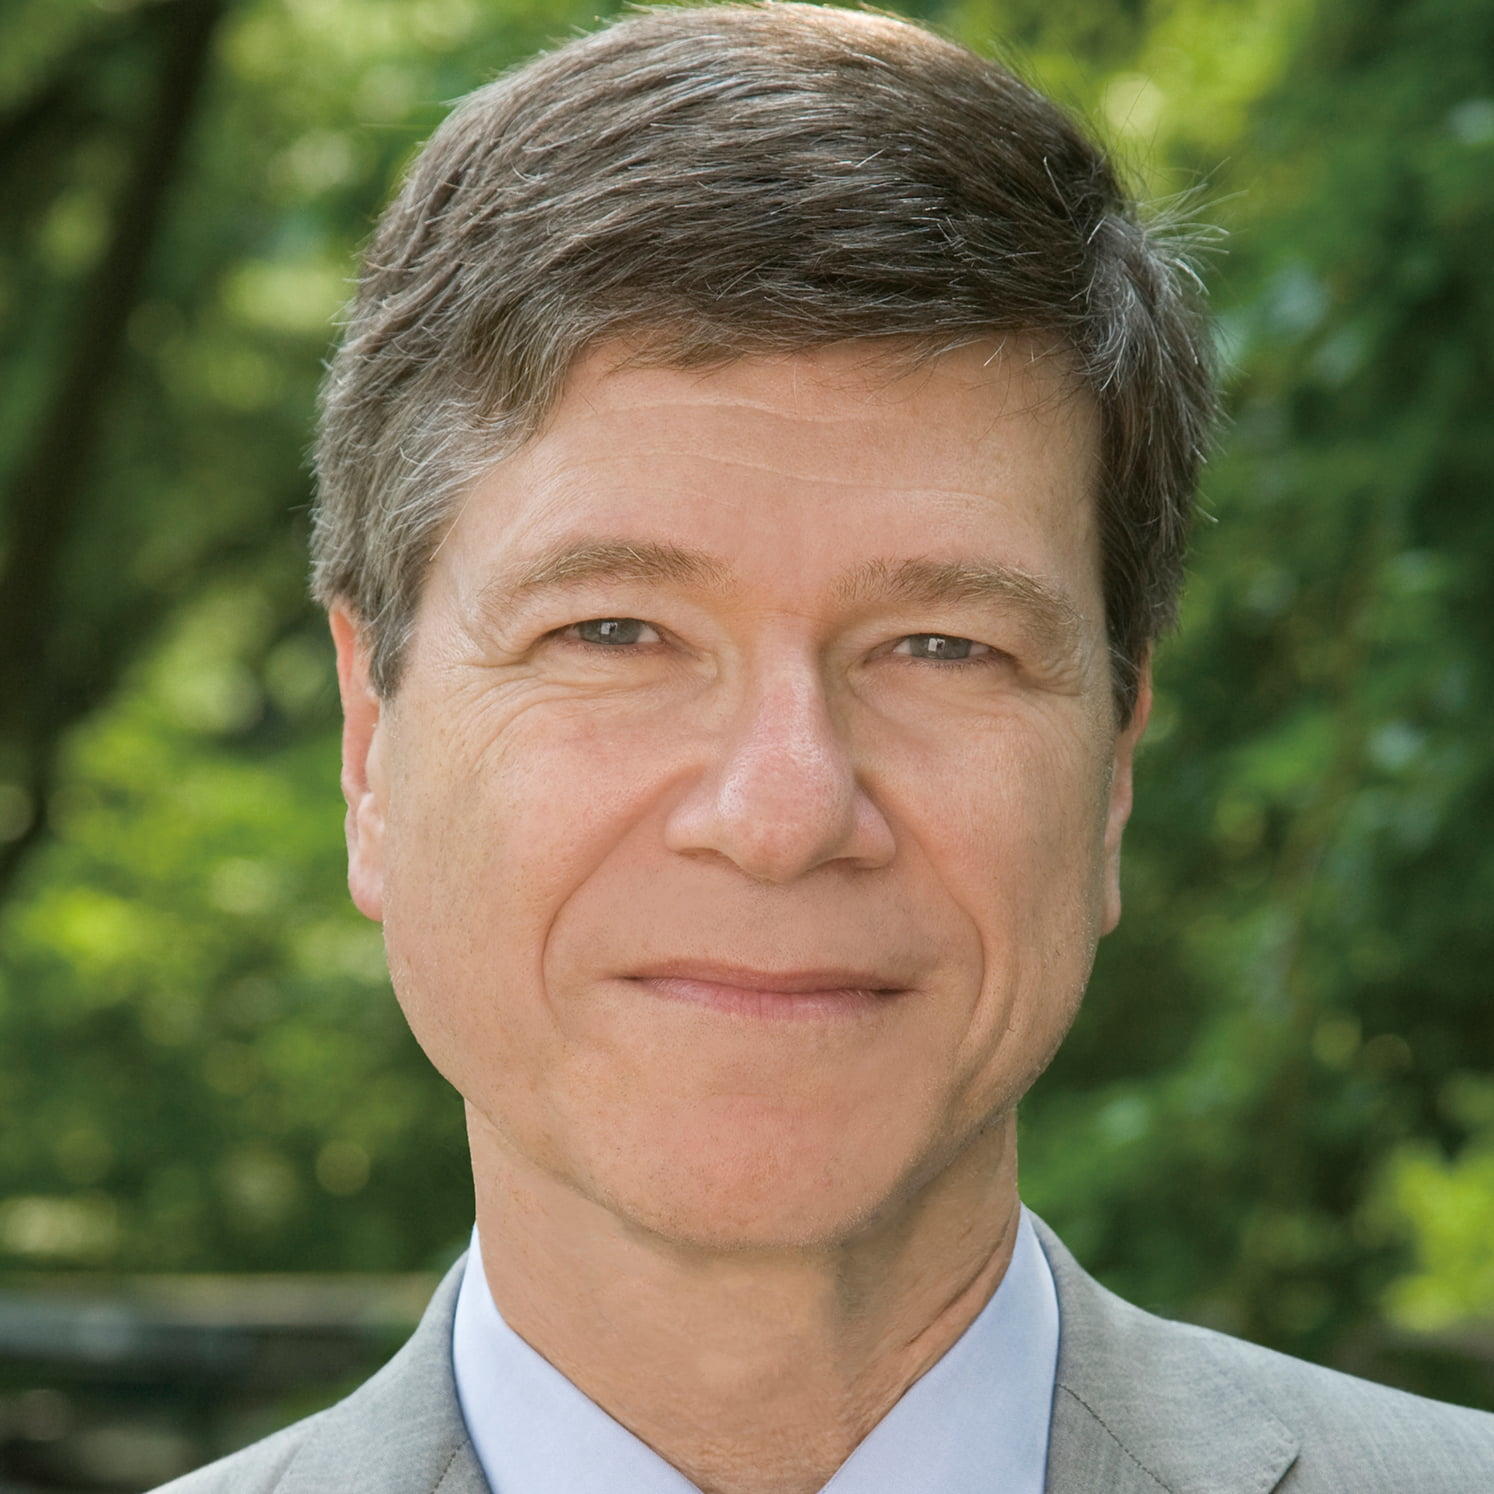 Professor Jeffrey D. Sachs